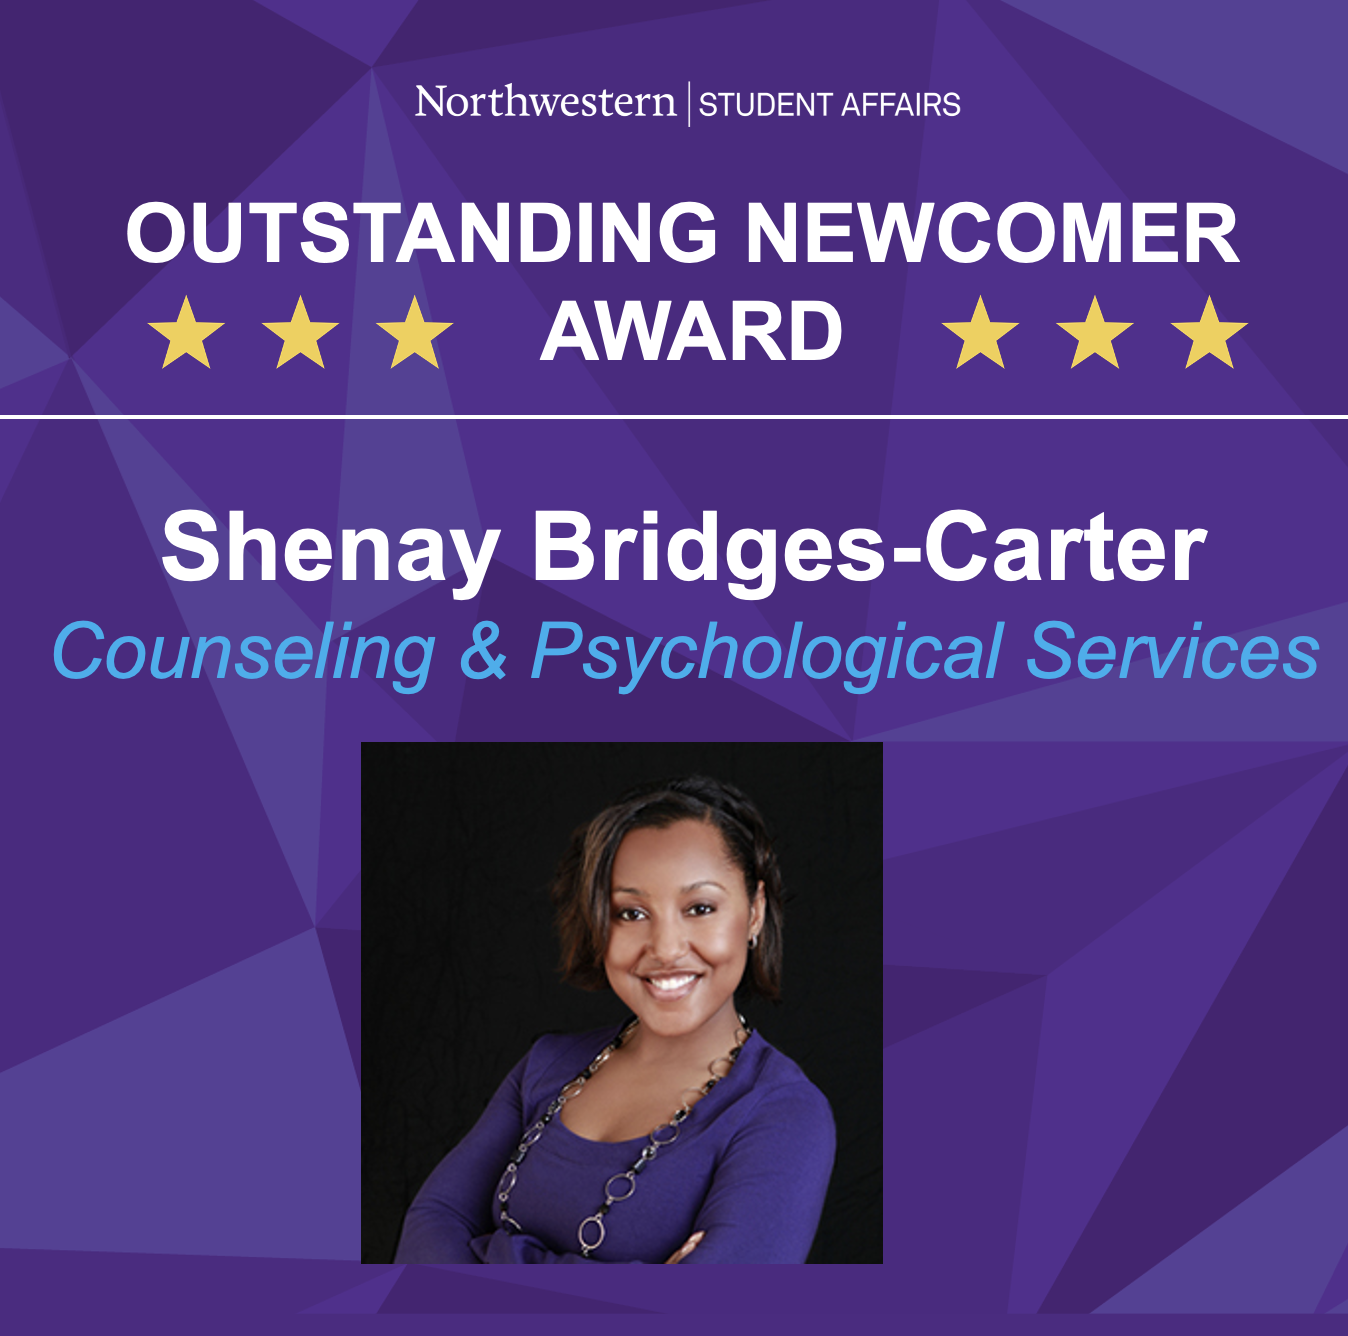 Shenay Bridges-Carter - Counseling & Psychological Services